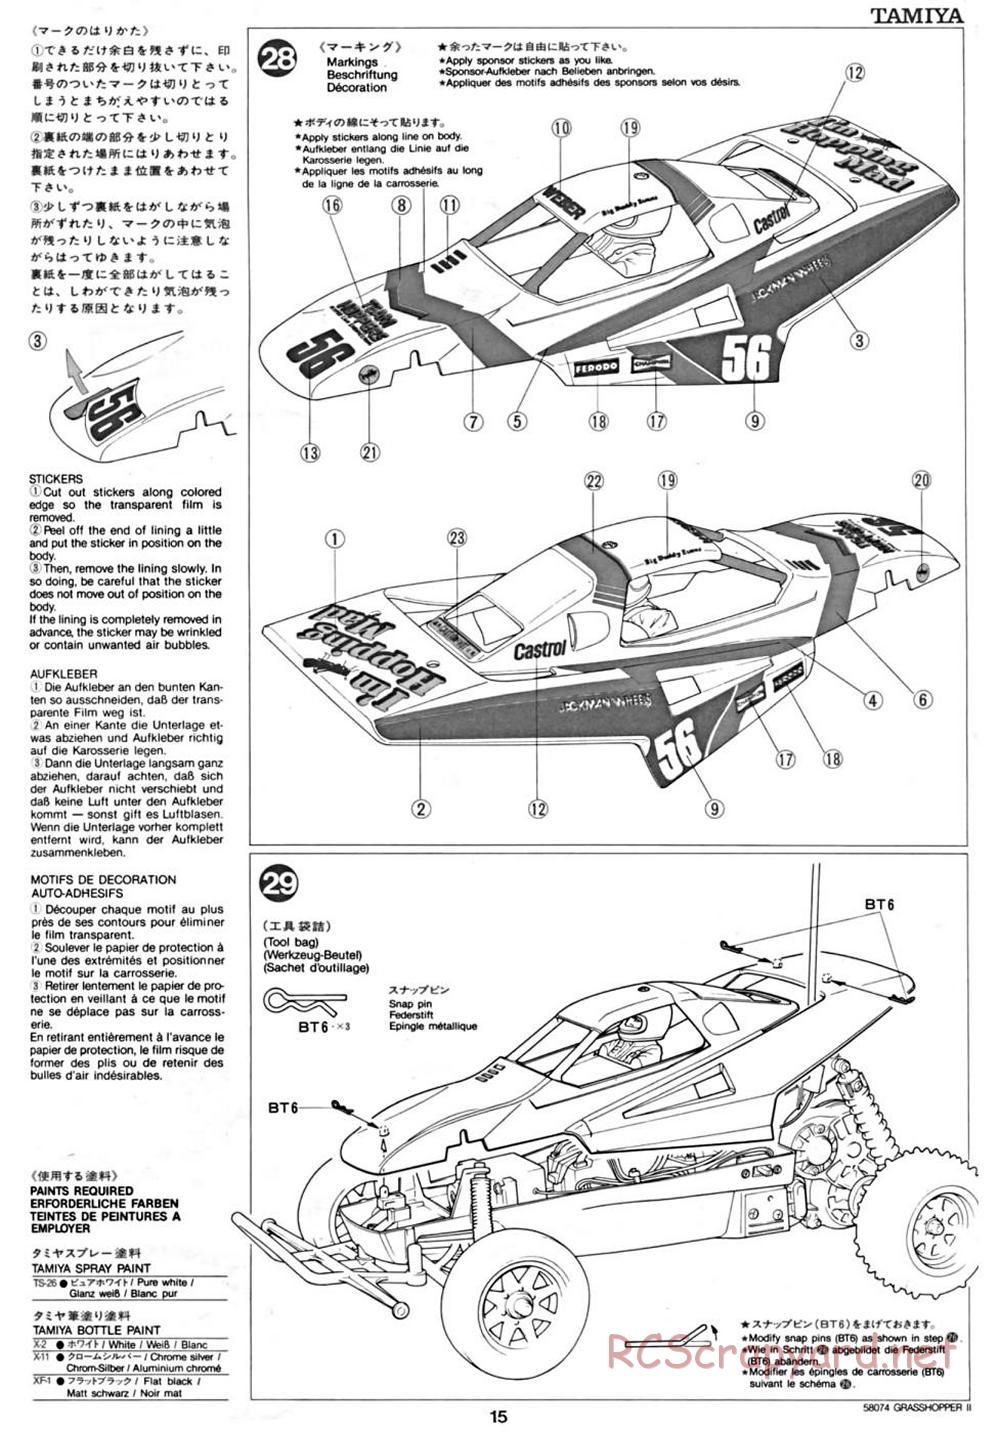 Tamiya - The Grasshopper II - 58074 - Manual - Page 15